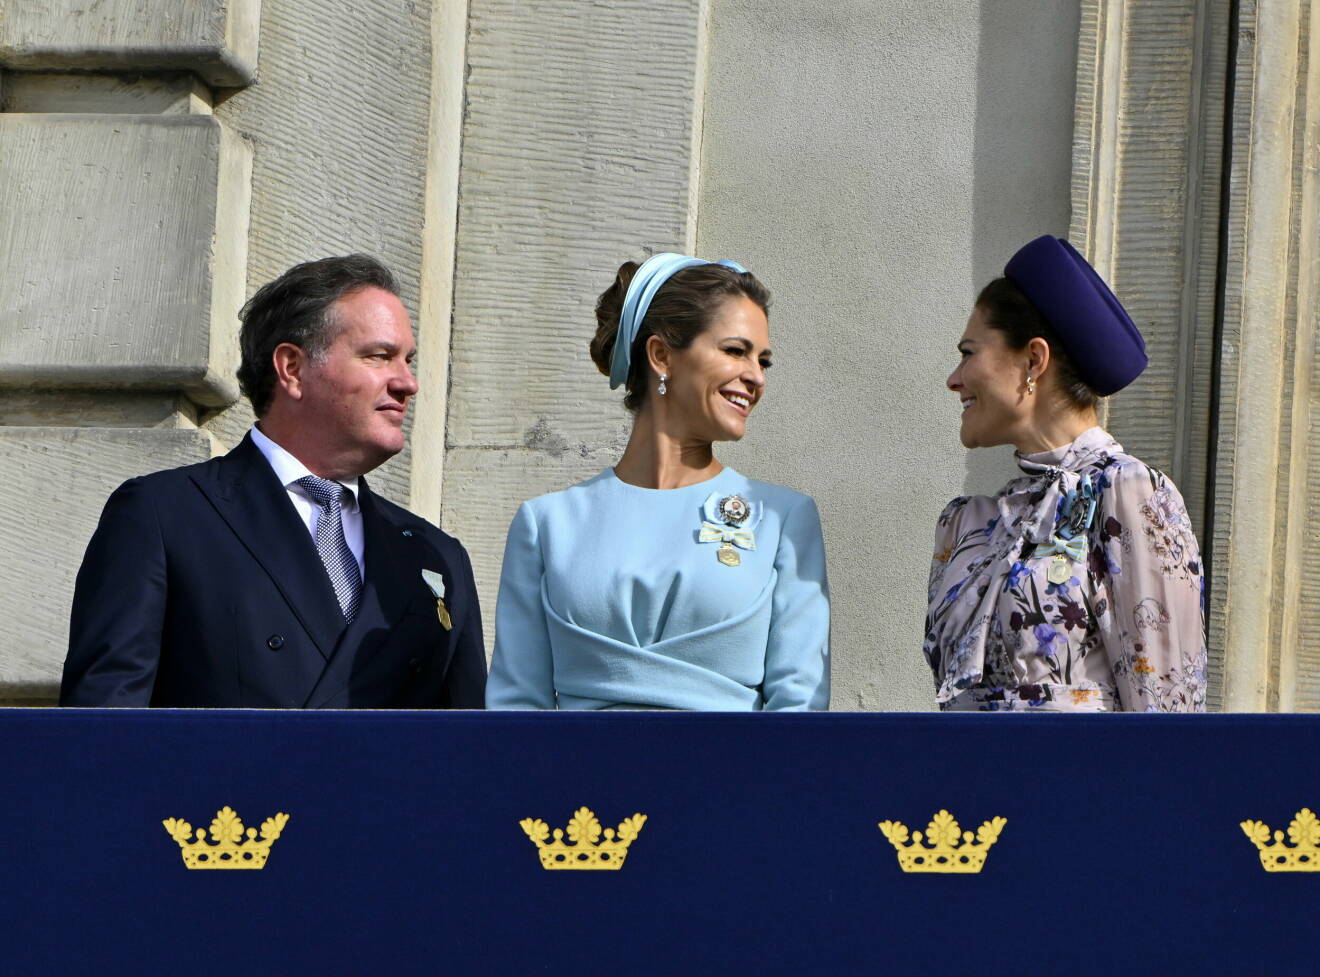 Chris O'Neill, prinsessan Madeleine och kronprinsessan Victoria